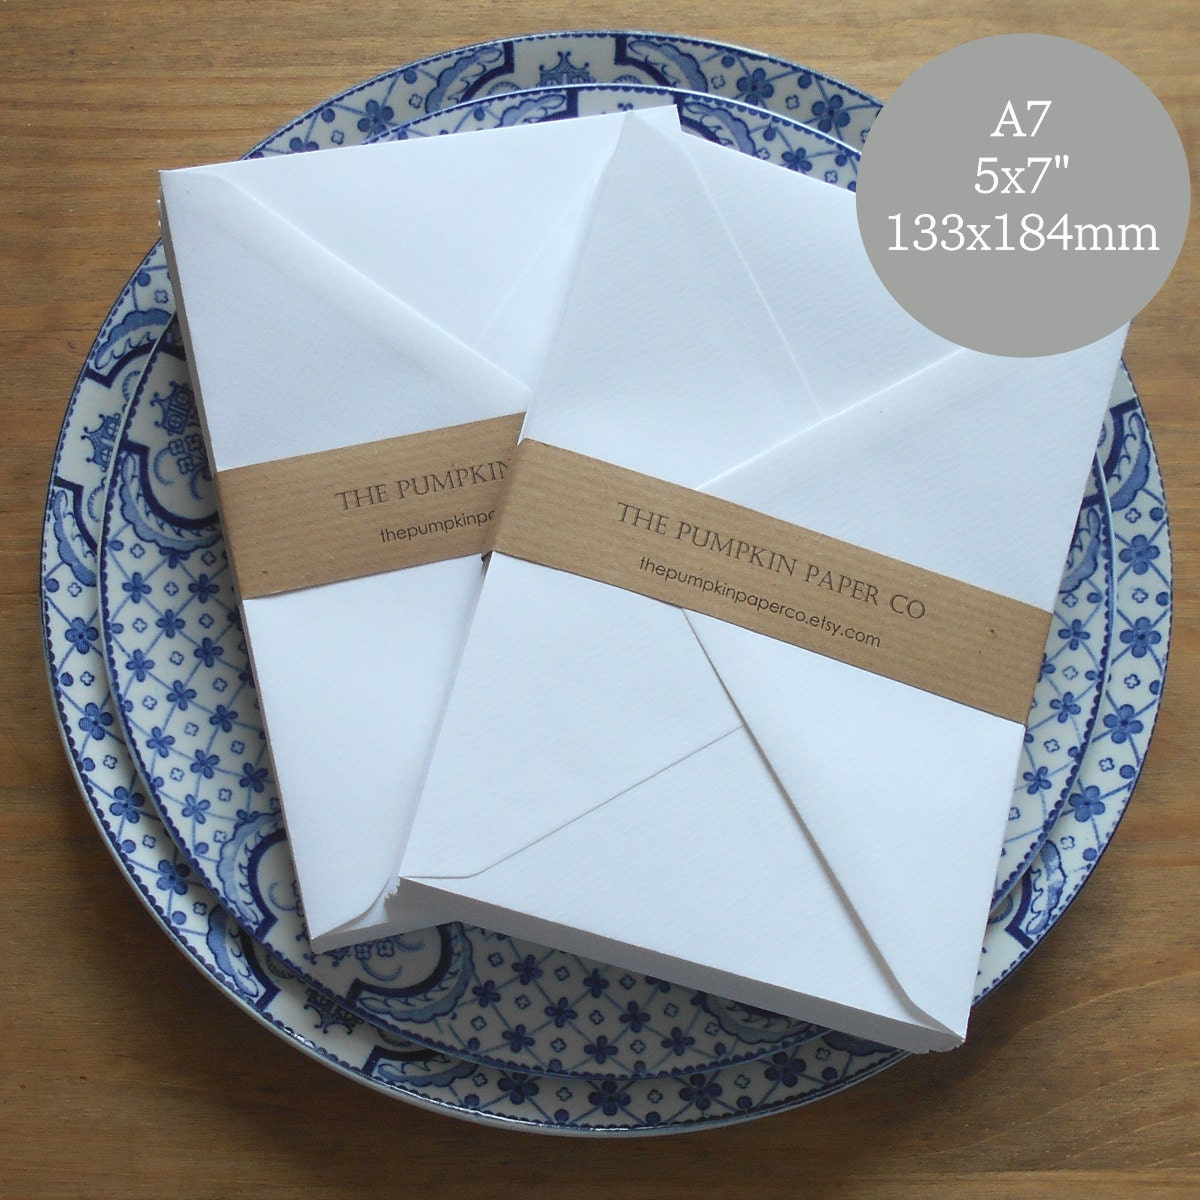 A7 Envelopes For Wedding Invitations 3